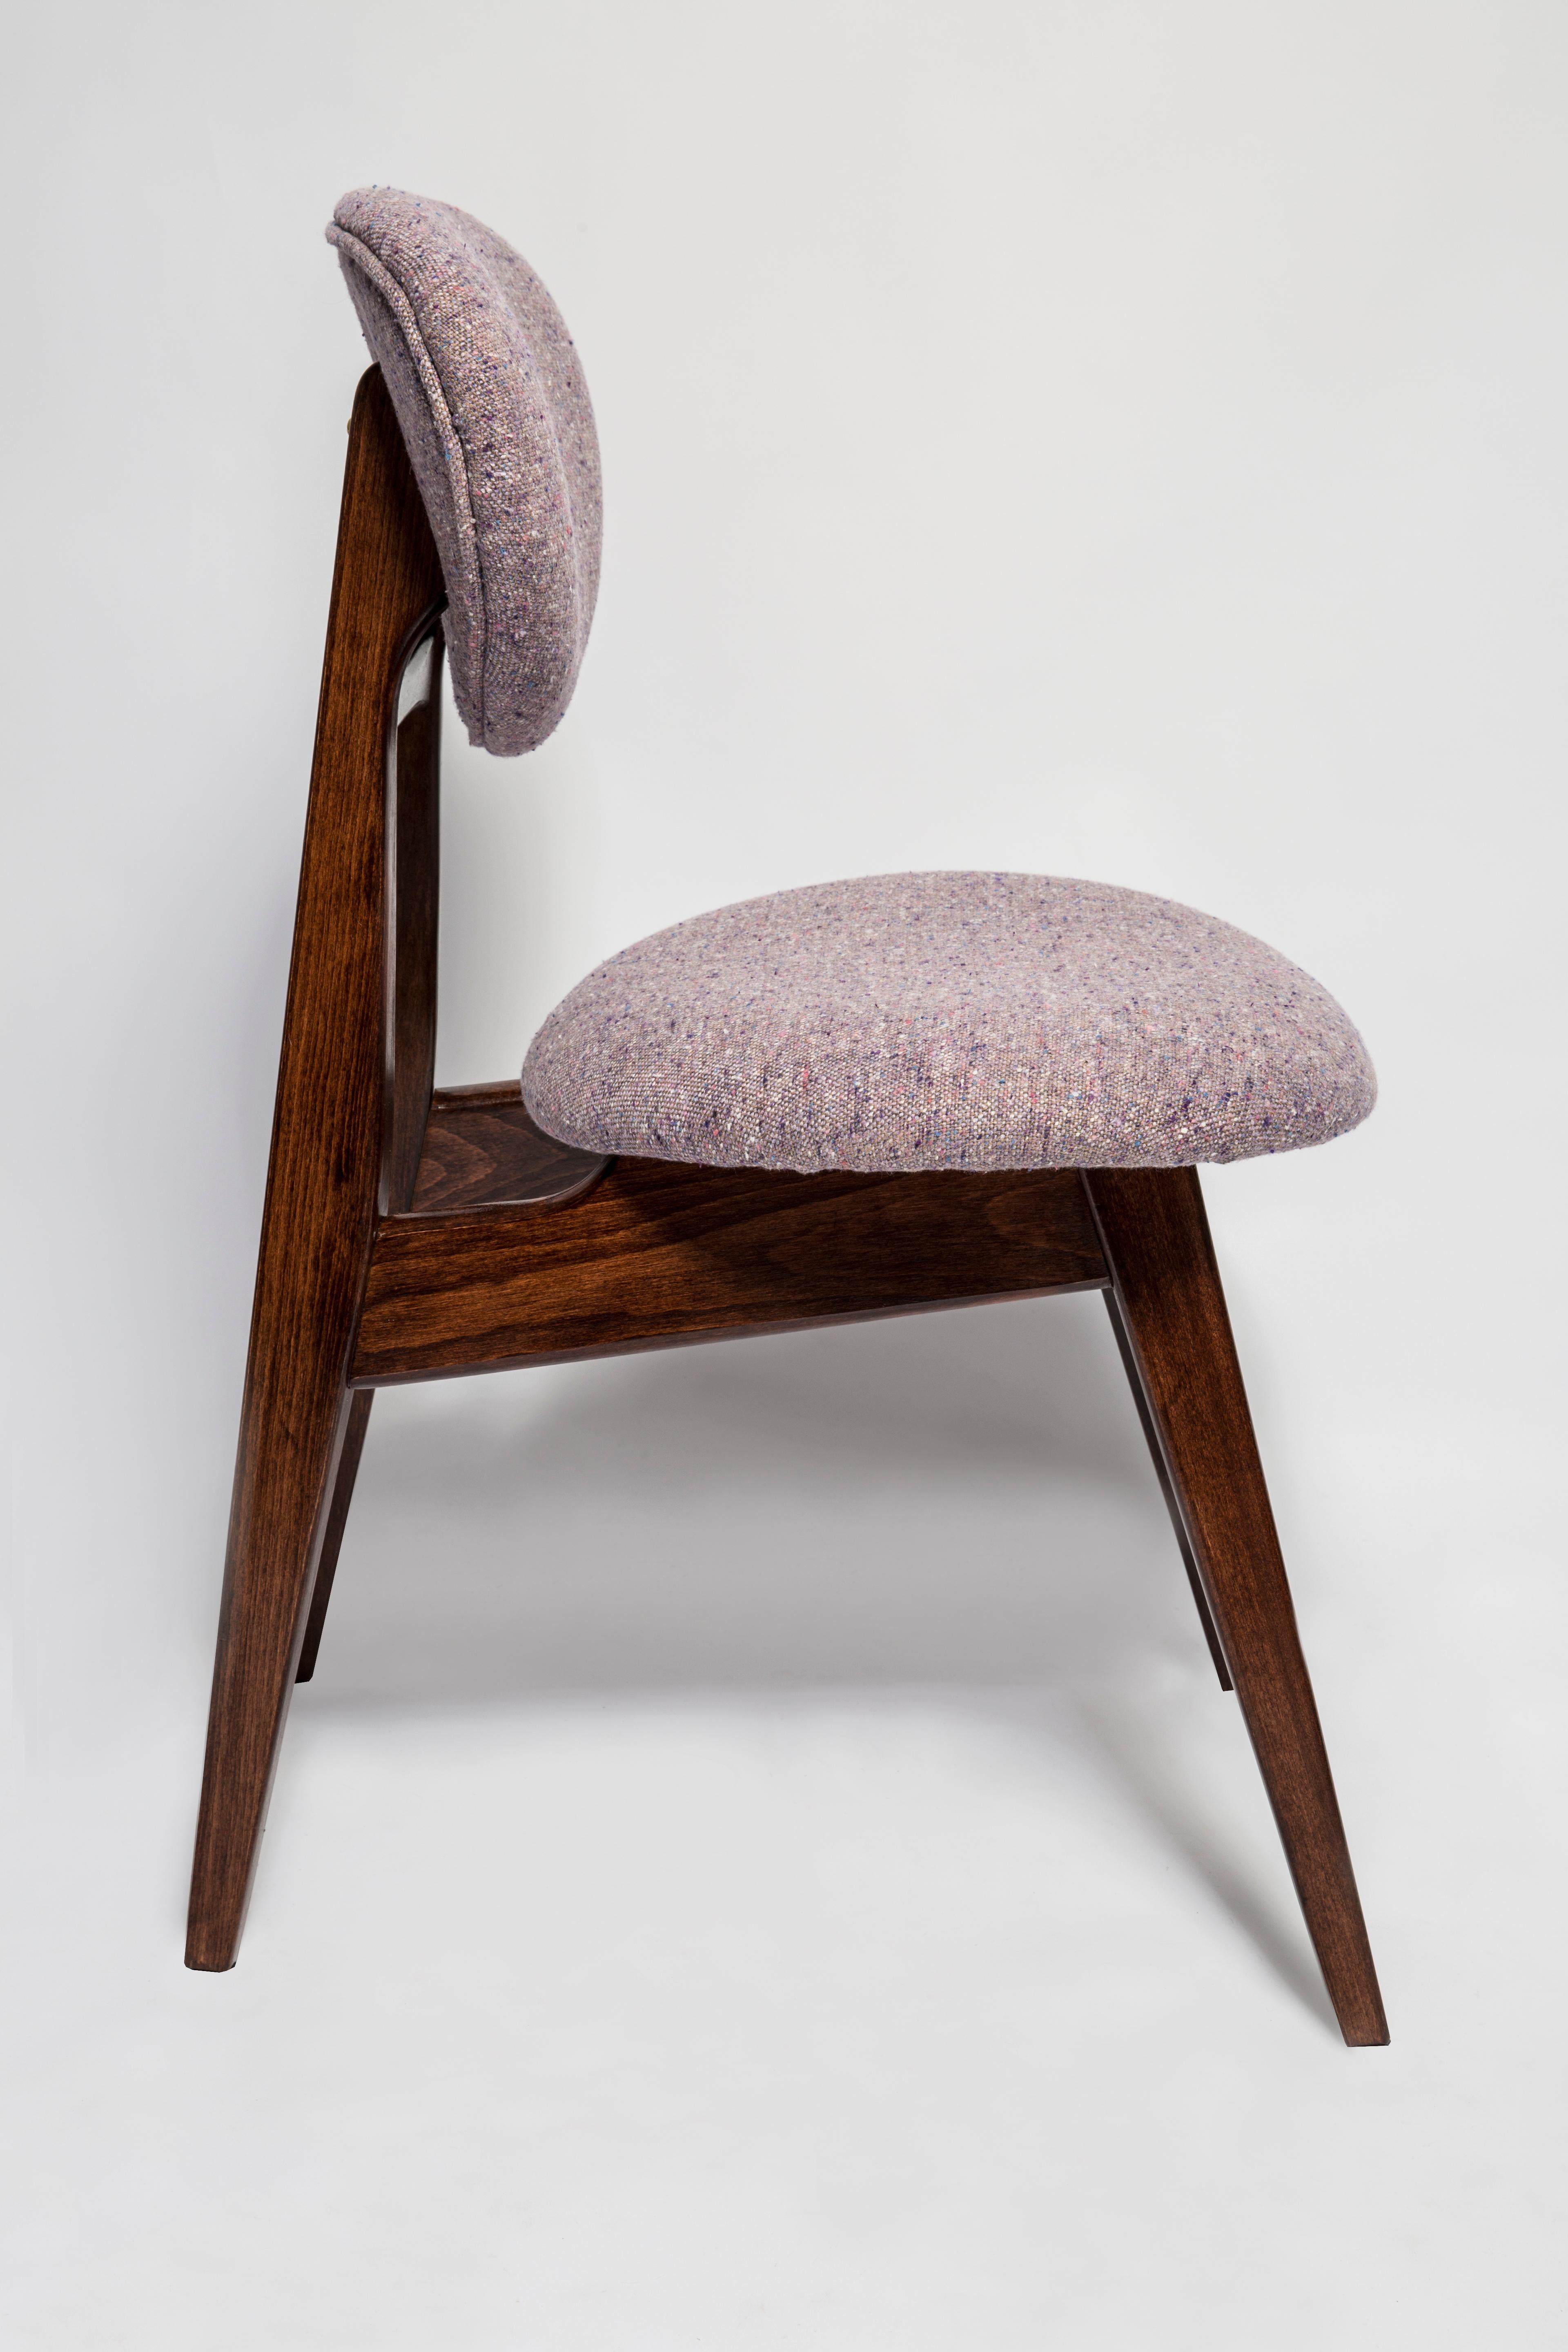 Hand-Crafted Mid-Century Purple Mushroom Chair, Type 200/128, by J. Kedziorek, Europe, 1960s For Sale